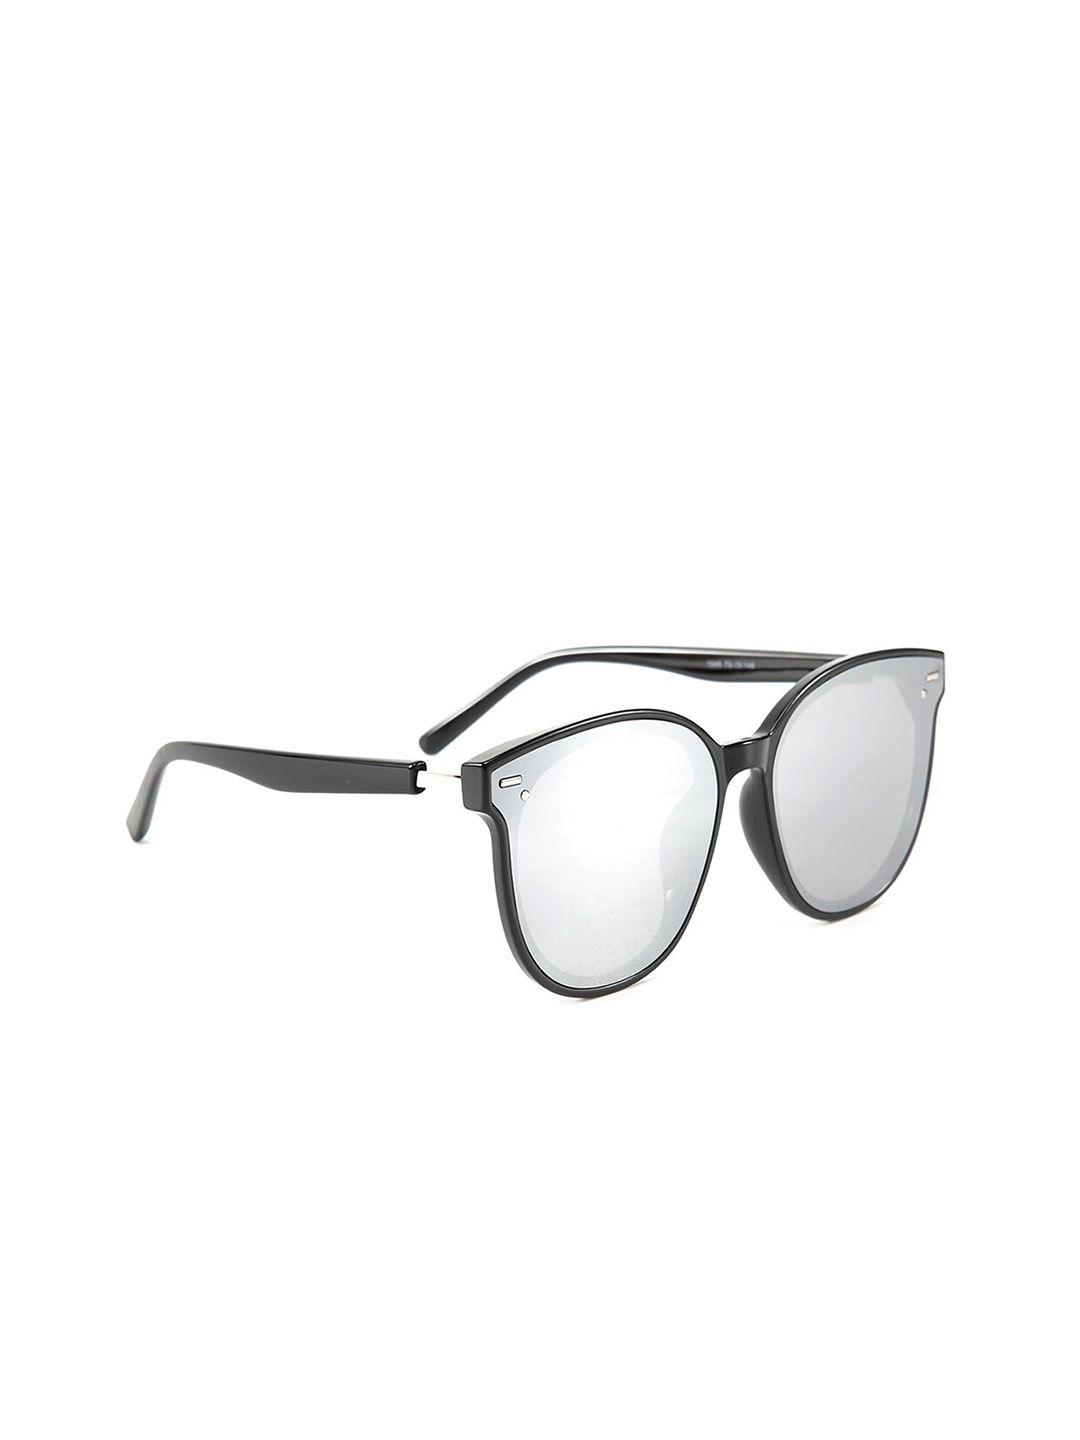 intellilens unisex grey lens & black butterfly uv protected hd sunglasses 1000000060978